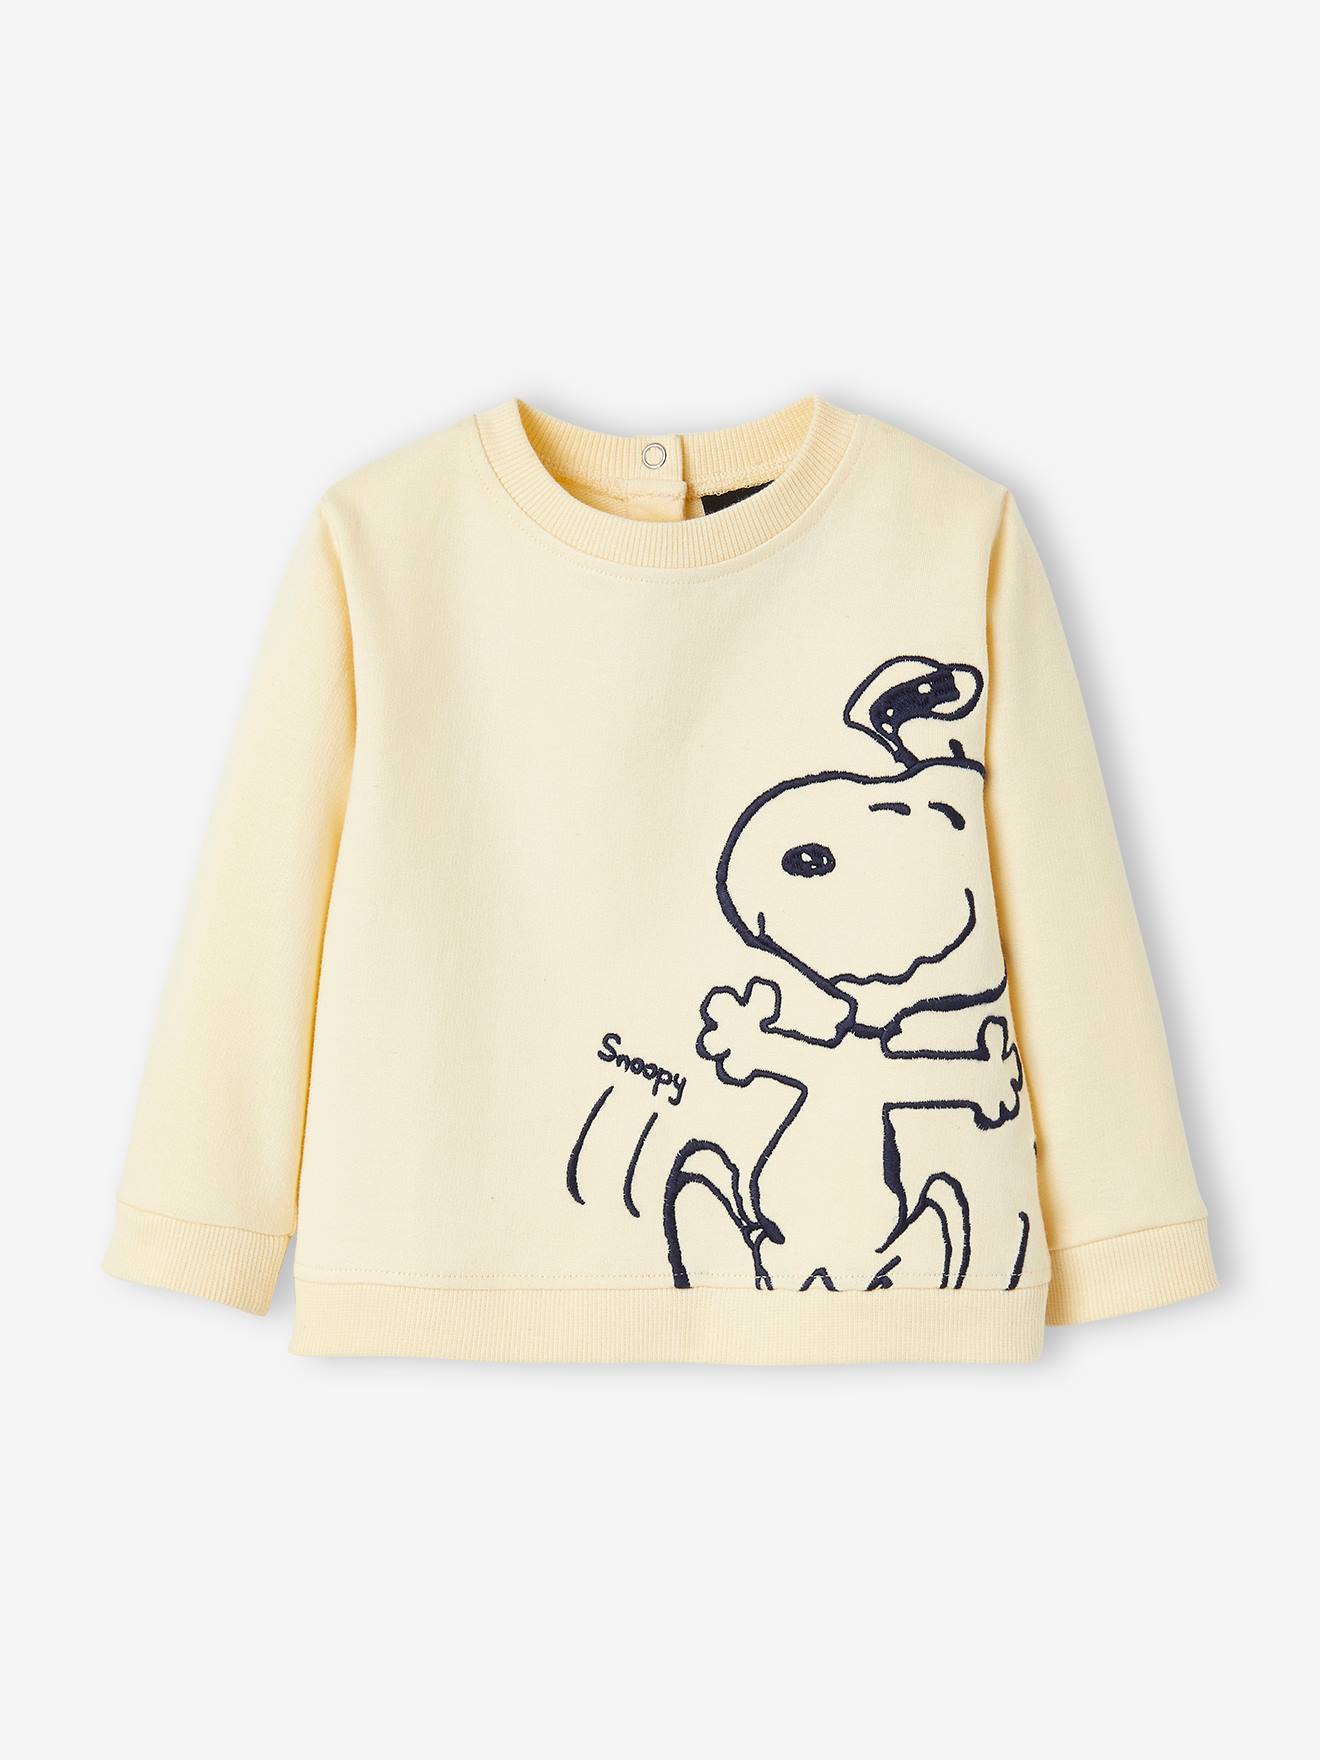 Snoopy Sweatshirt for Baby Boys, by Peanuts(r) beige